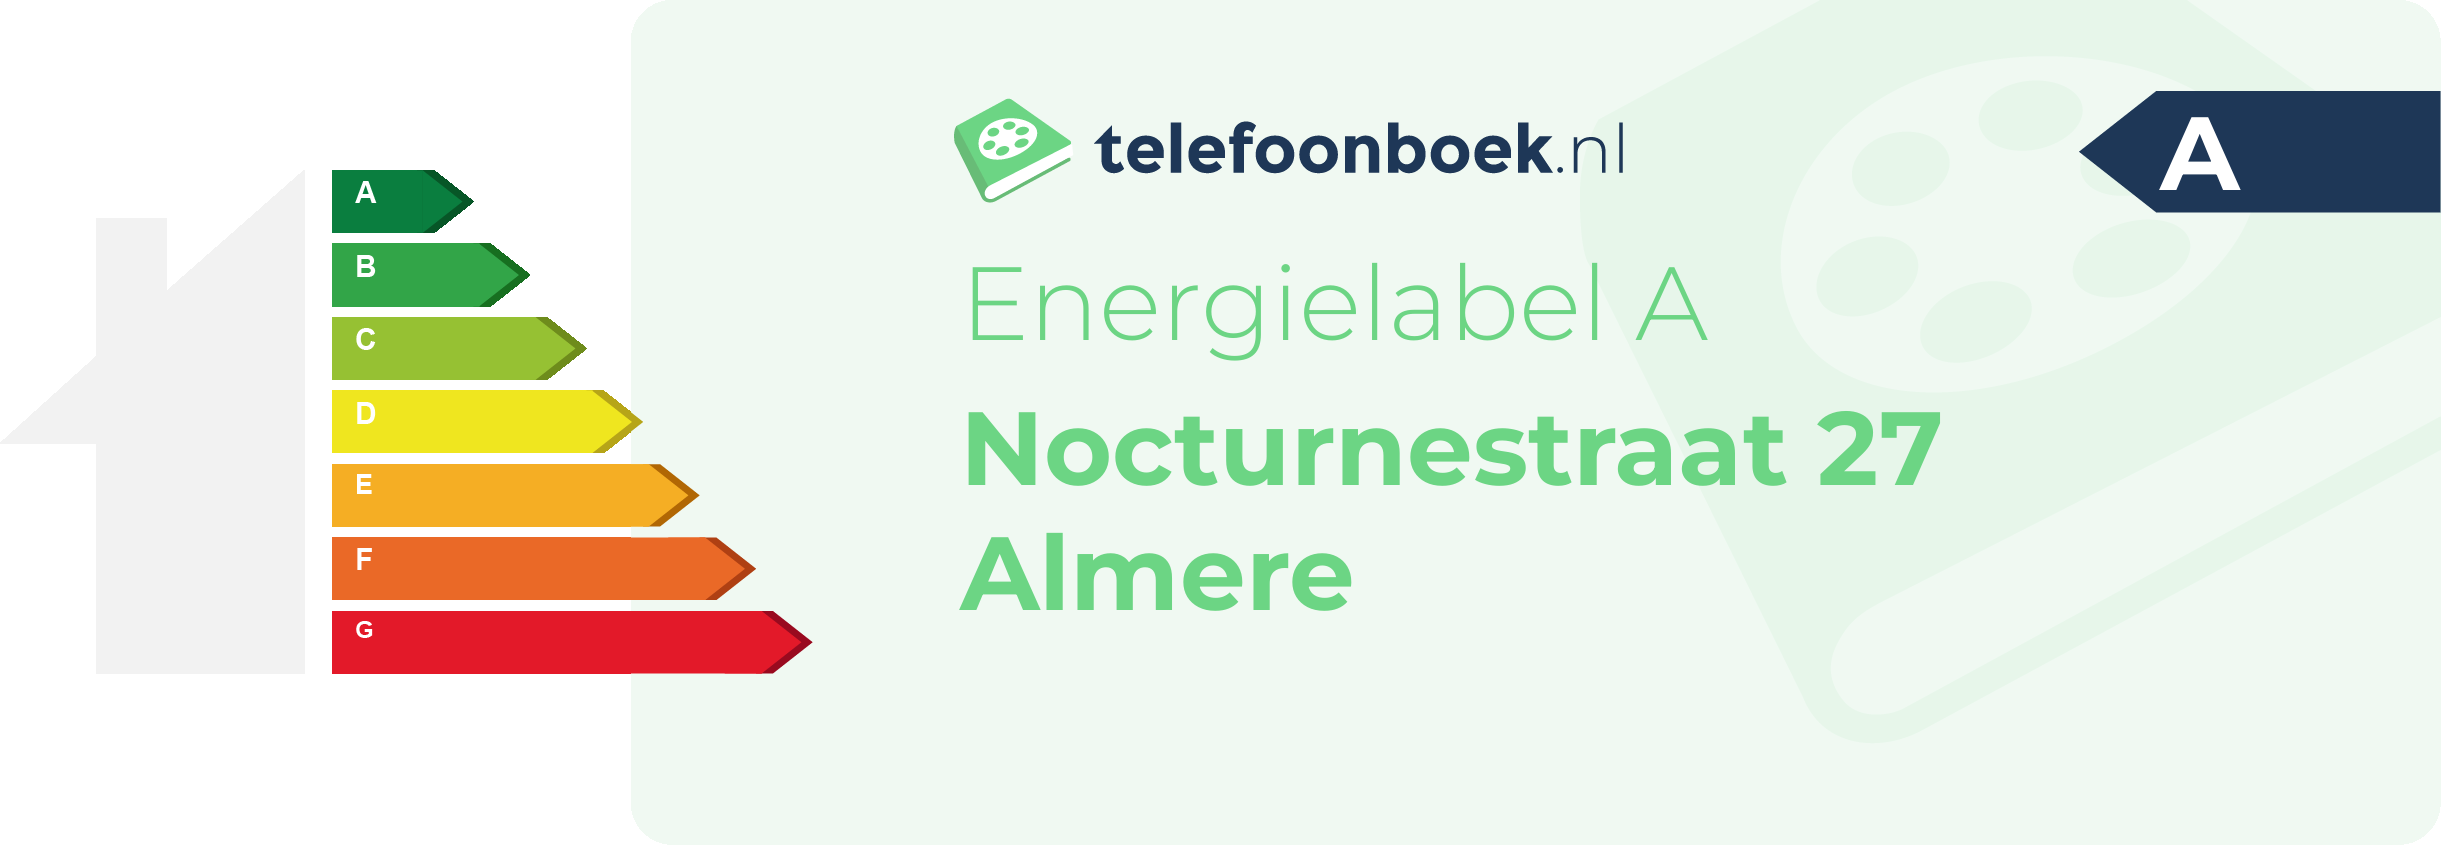 Energielabel Nocturnestraat 27 Almere